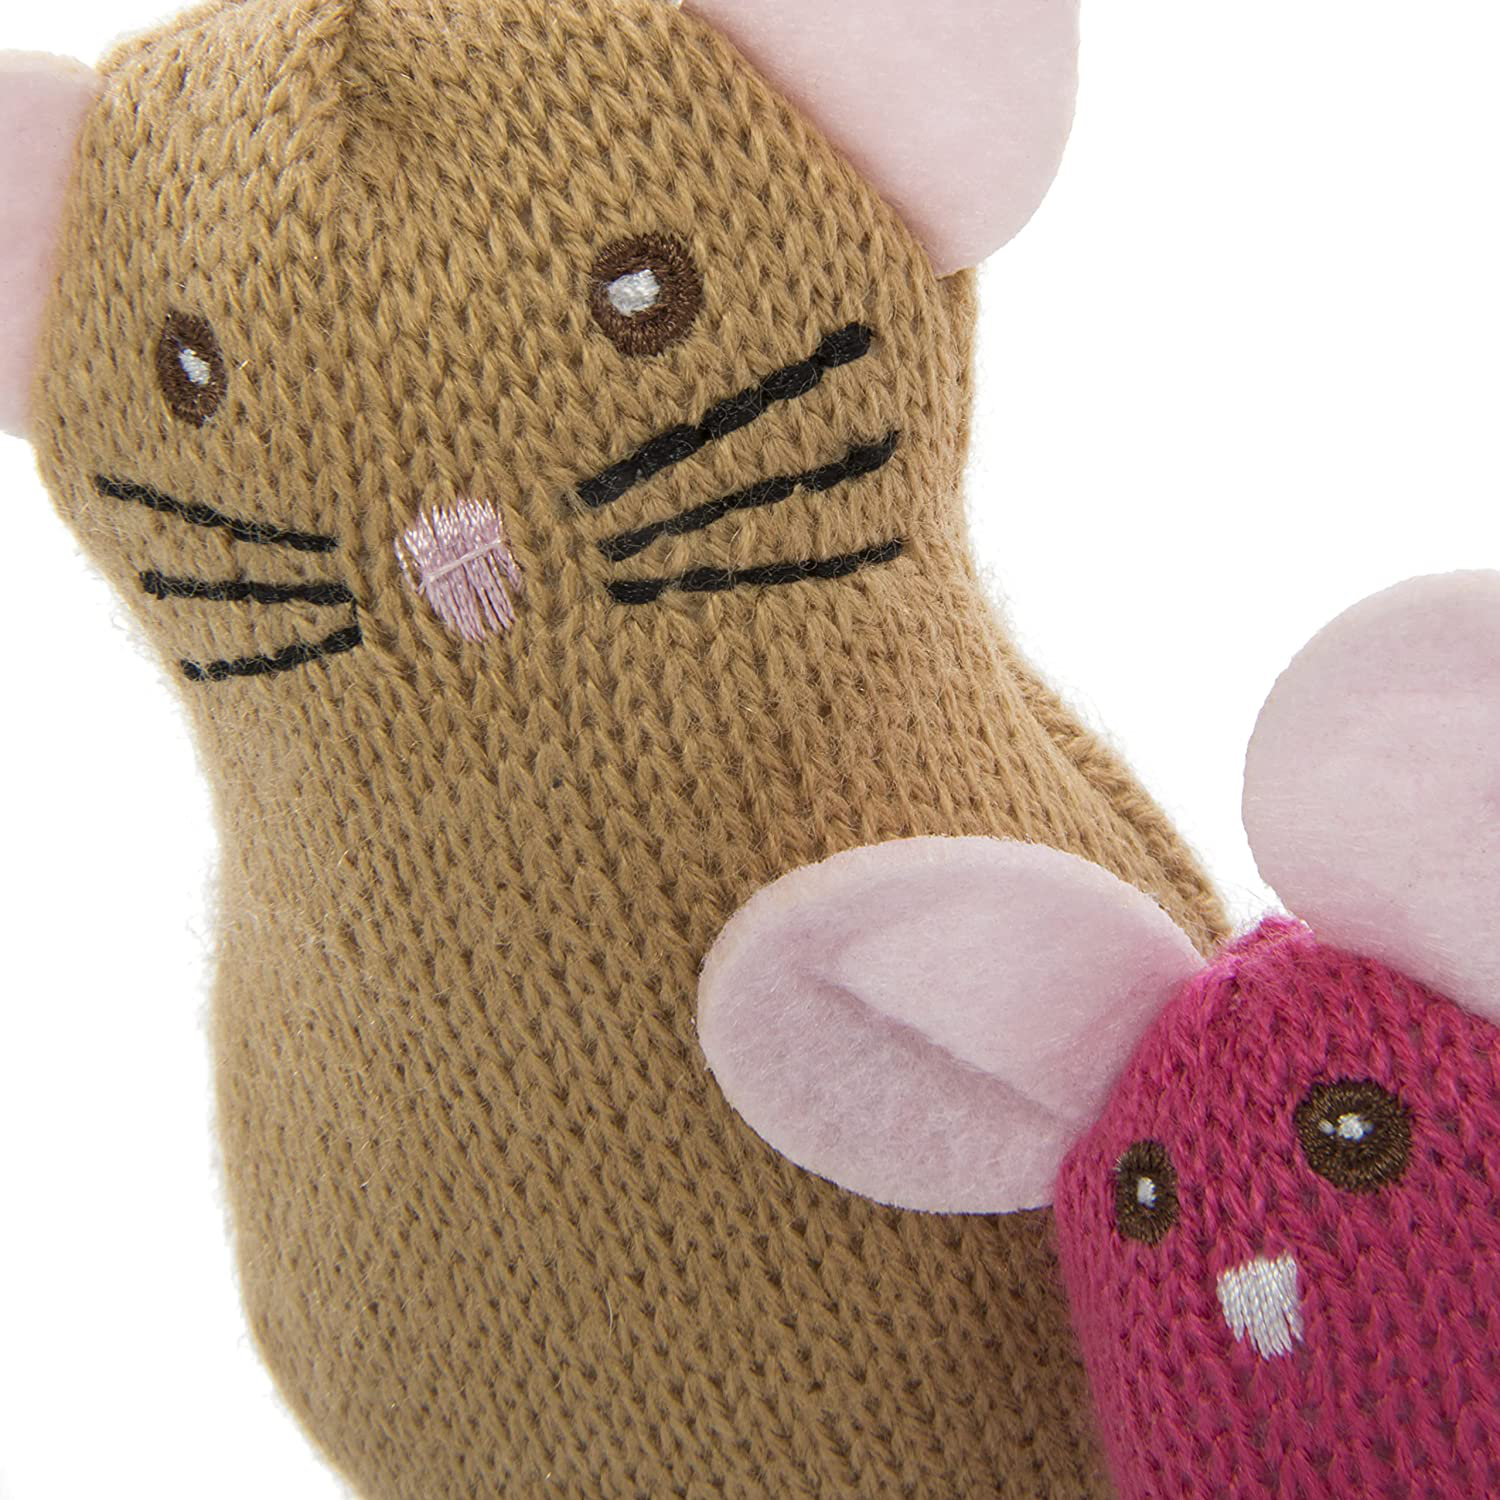 Petlinks Knit Nipper Cat & Mouse Refillable Catnip Toys